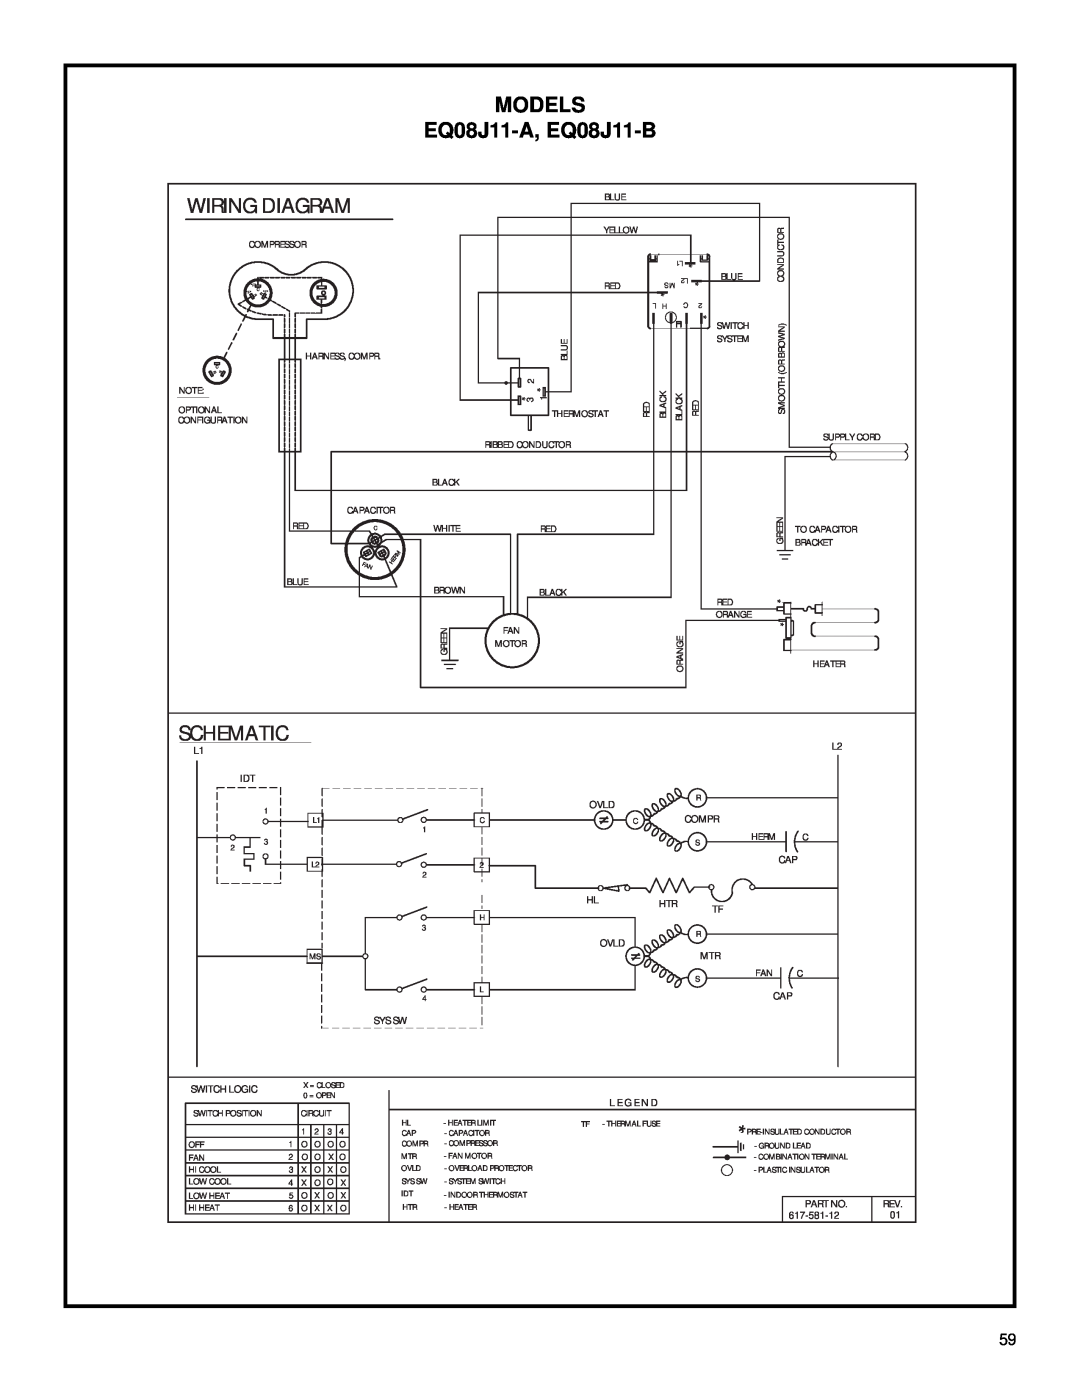 Friedrich racservmn service manual EQ08J11-A, EQ08J11-B, Wiring Diagram, Models, Schematic 